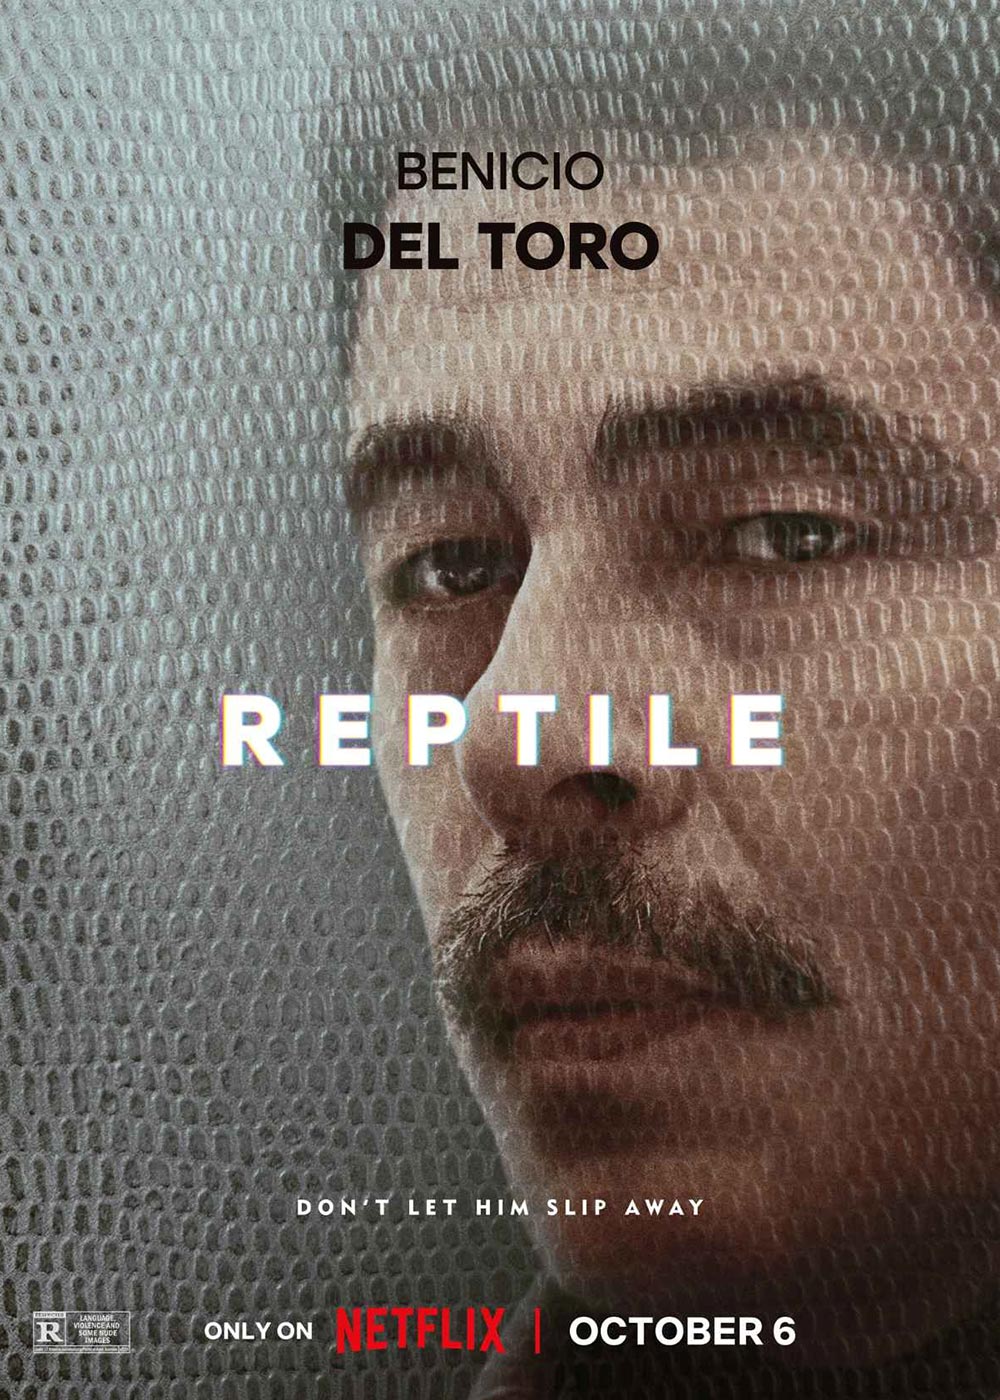 Reptile Movie (English) Cast, Music, Release Date, Trailer